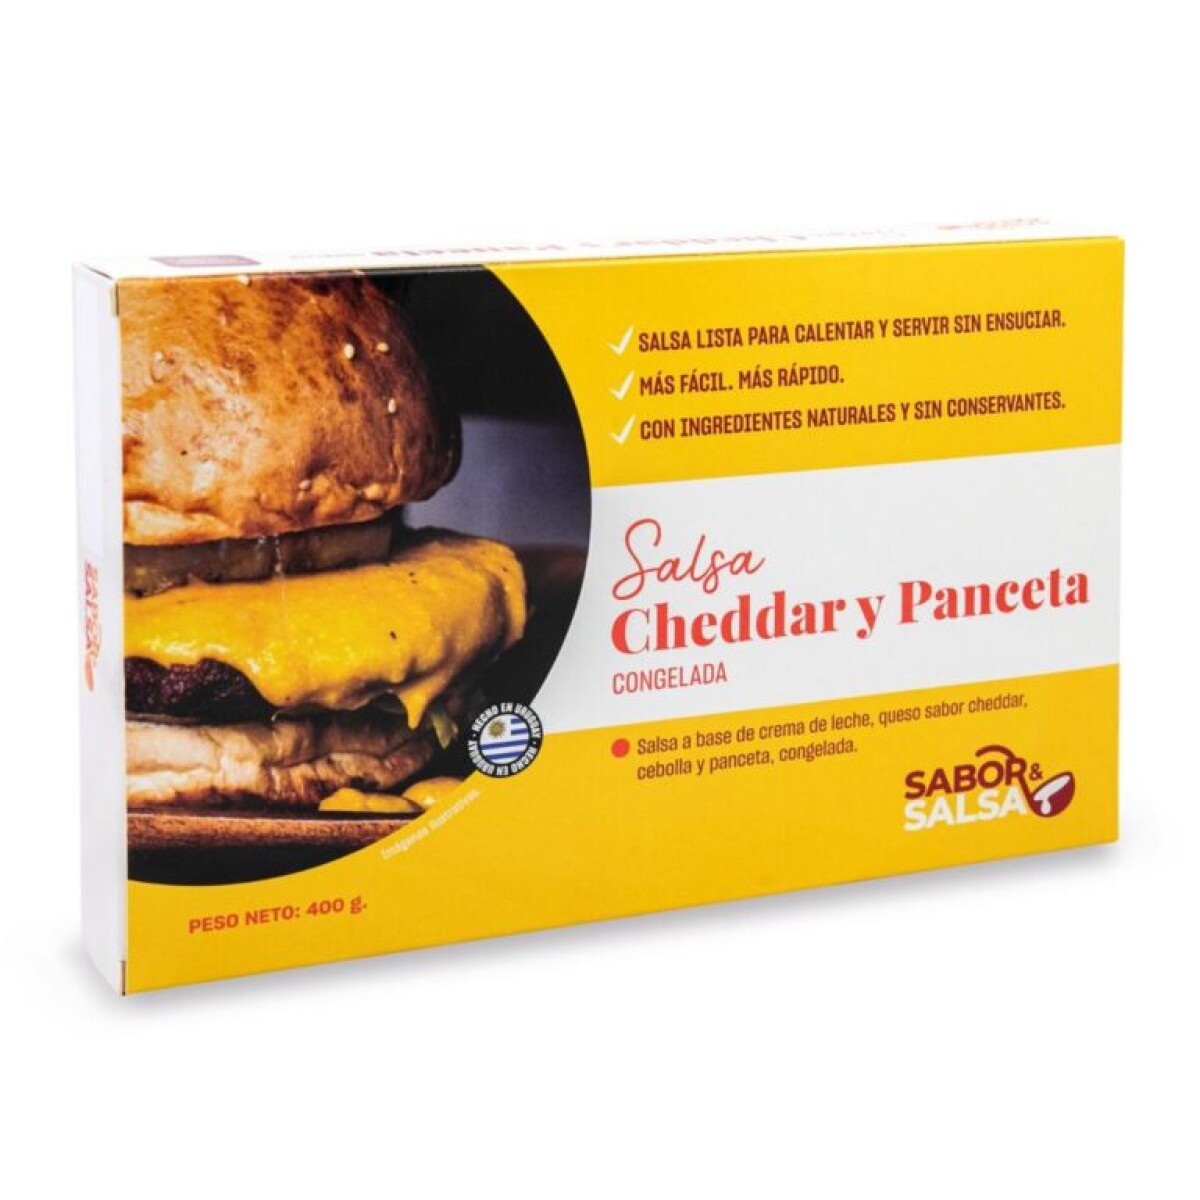 Salsa cheddar y panceta Sabor & Salsa - 400 gr 